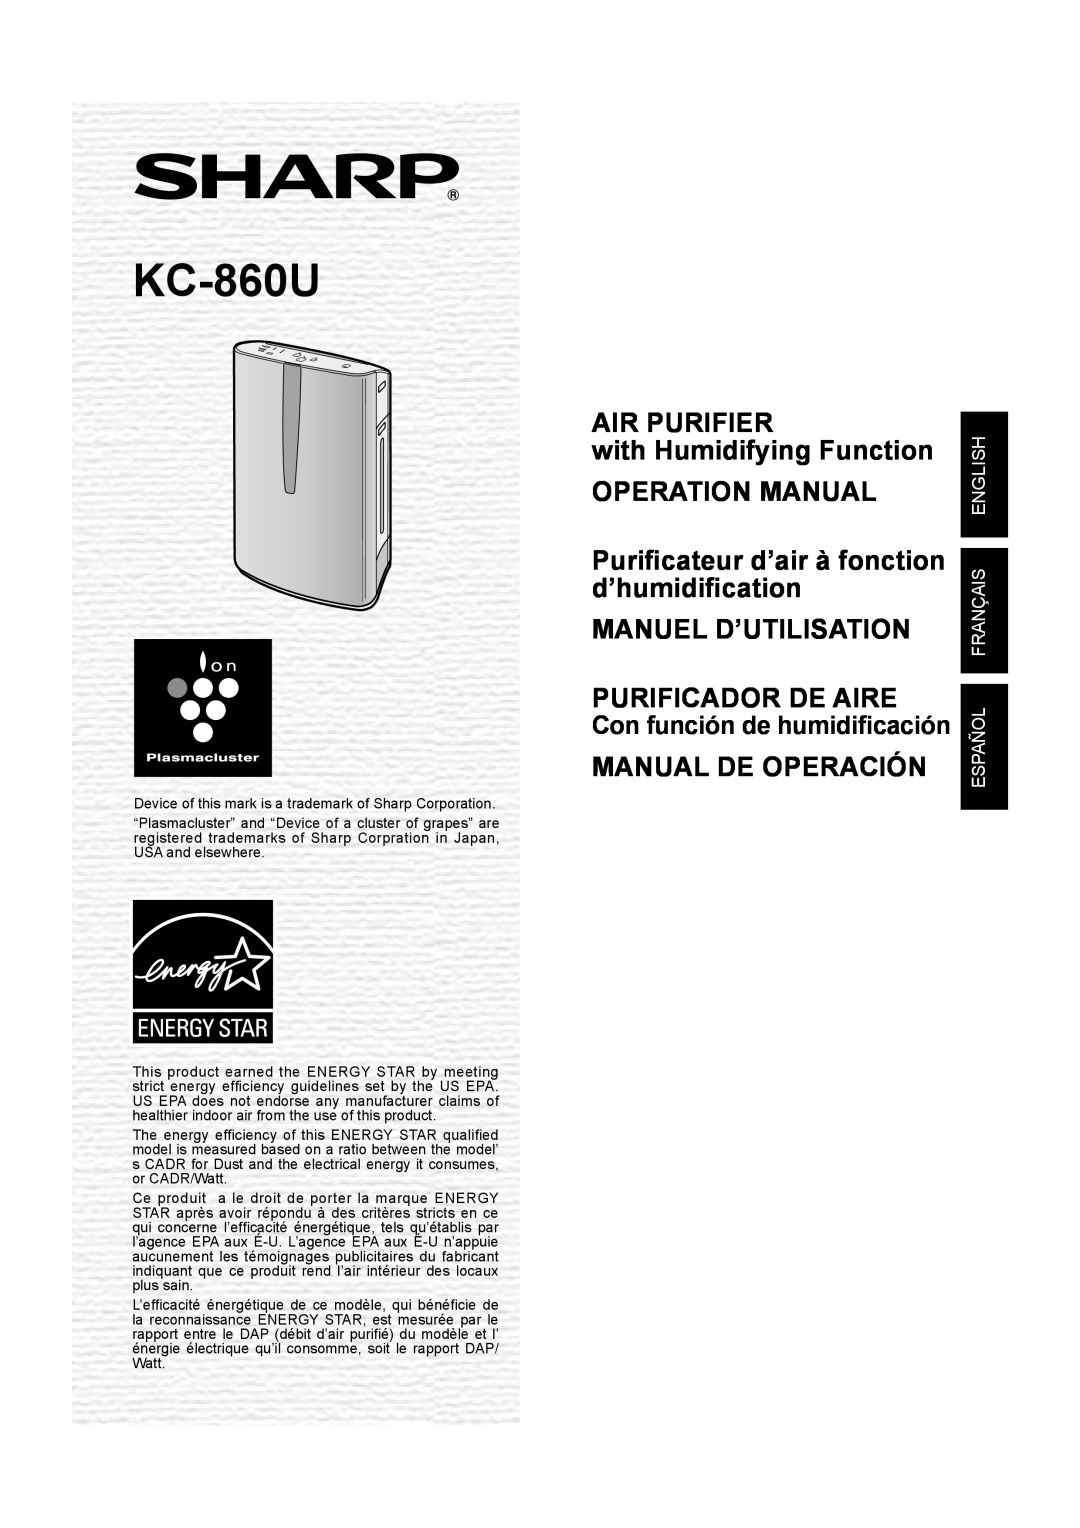 Sharp KC-860U operation manual AIR PURIFIER with Humidifying Function, Operation Manual, Manual De Operación 